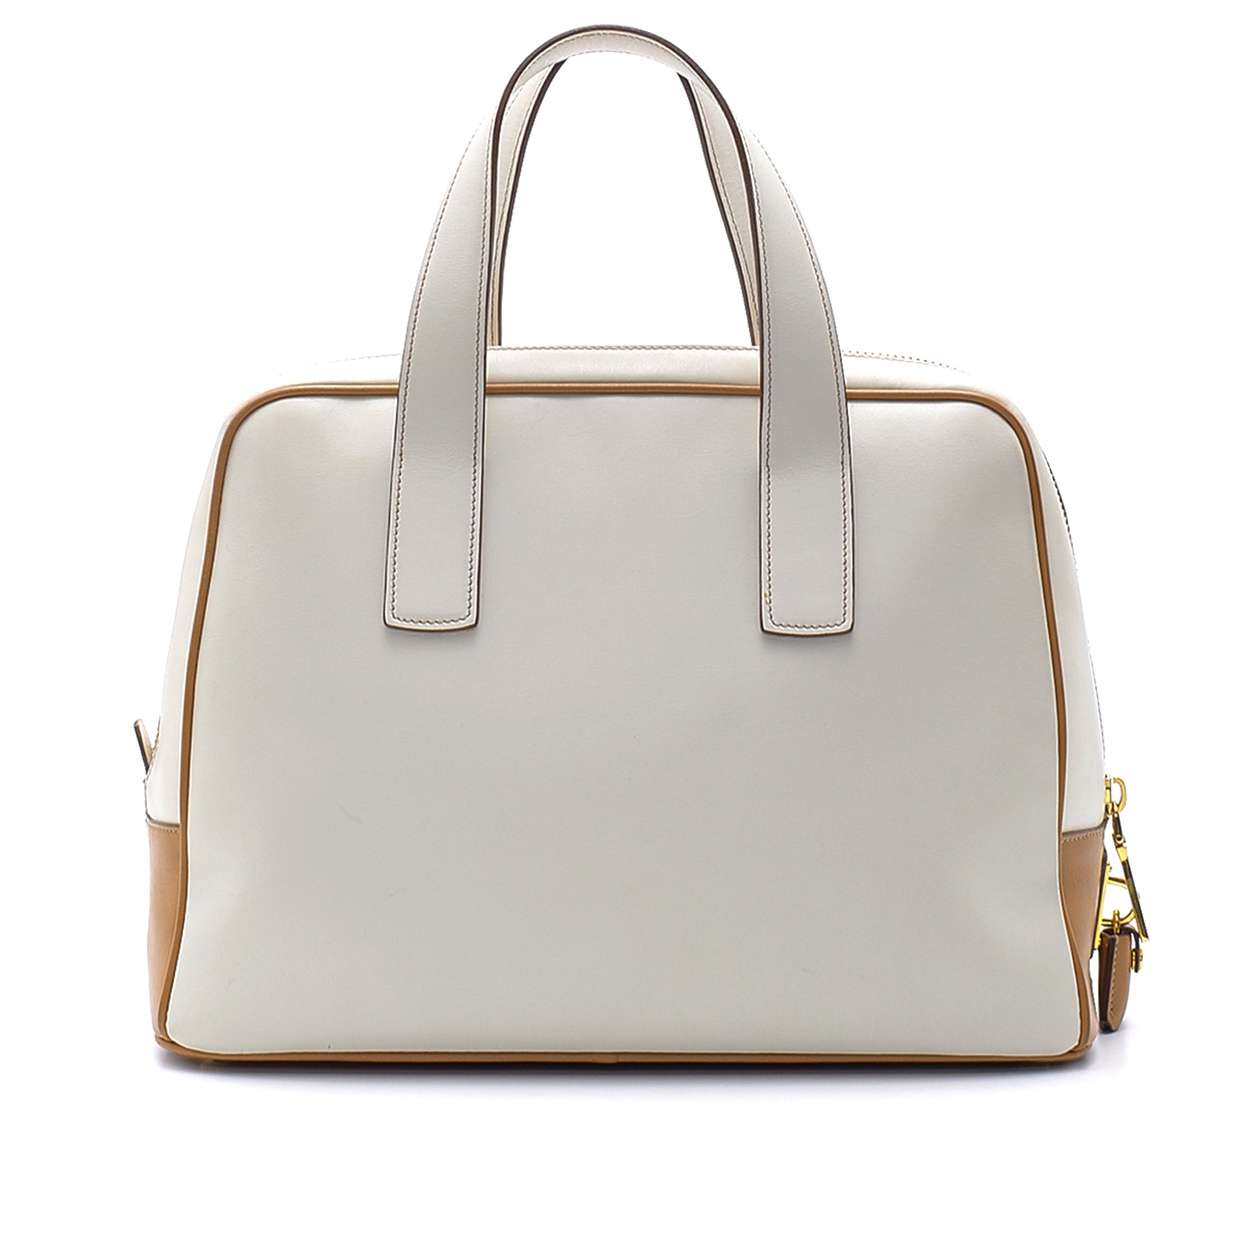 Prada - Two Tone Calfskin Leather Top Handle Bag